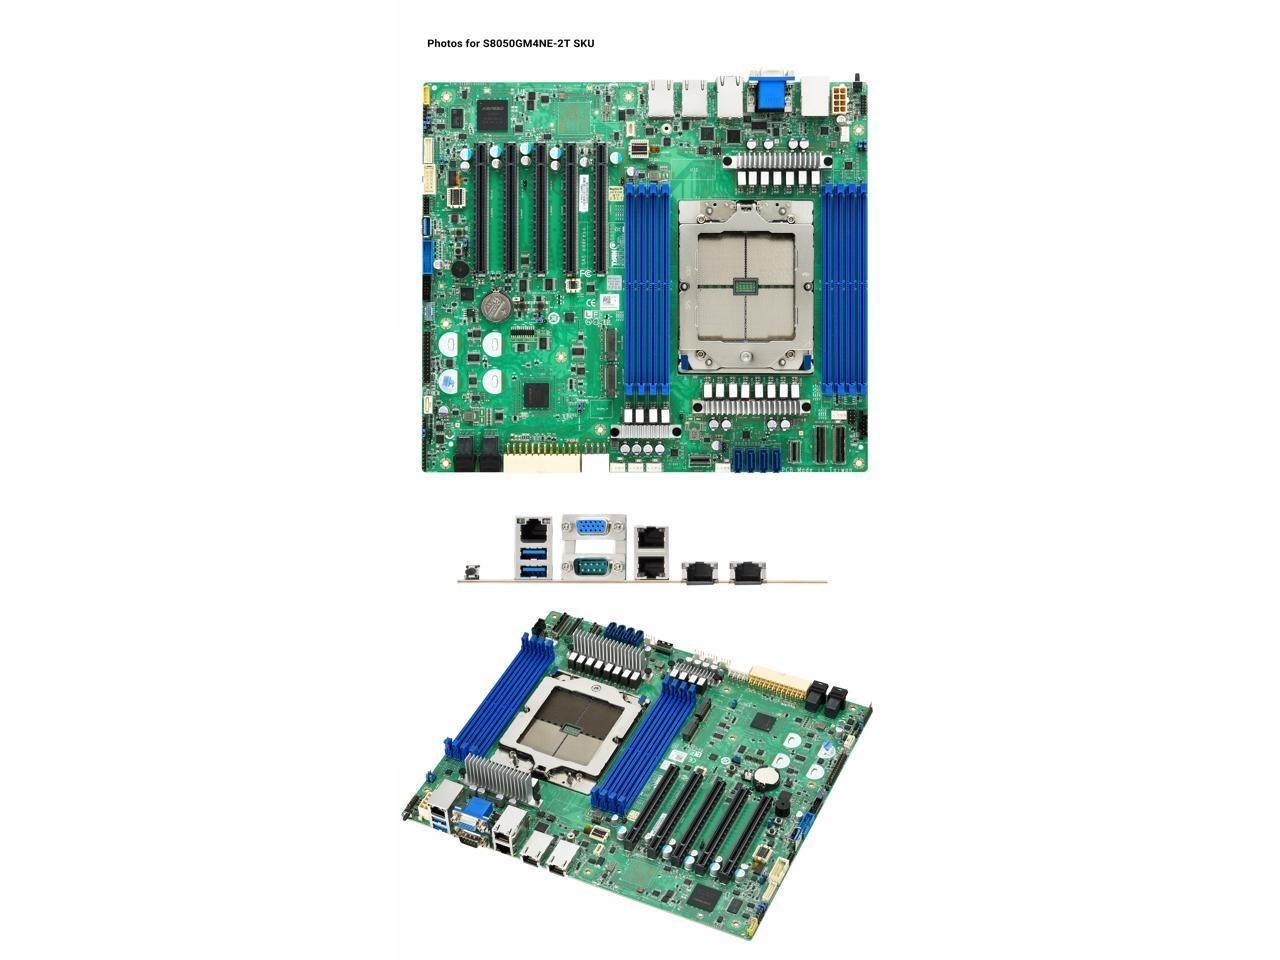 Tyan Tomcat HX S8050 Amd Epyc 9004 DDR5 S8050gm2ne 1S Compact Server Ceb Motherboard